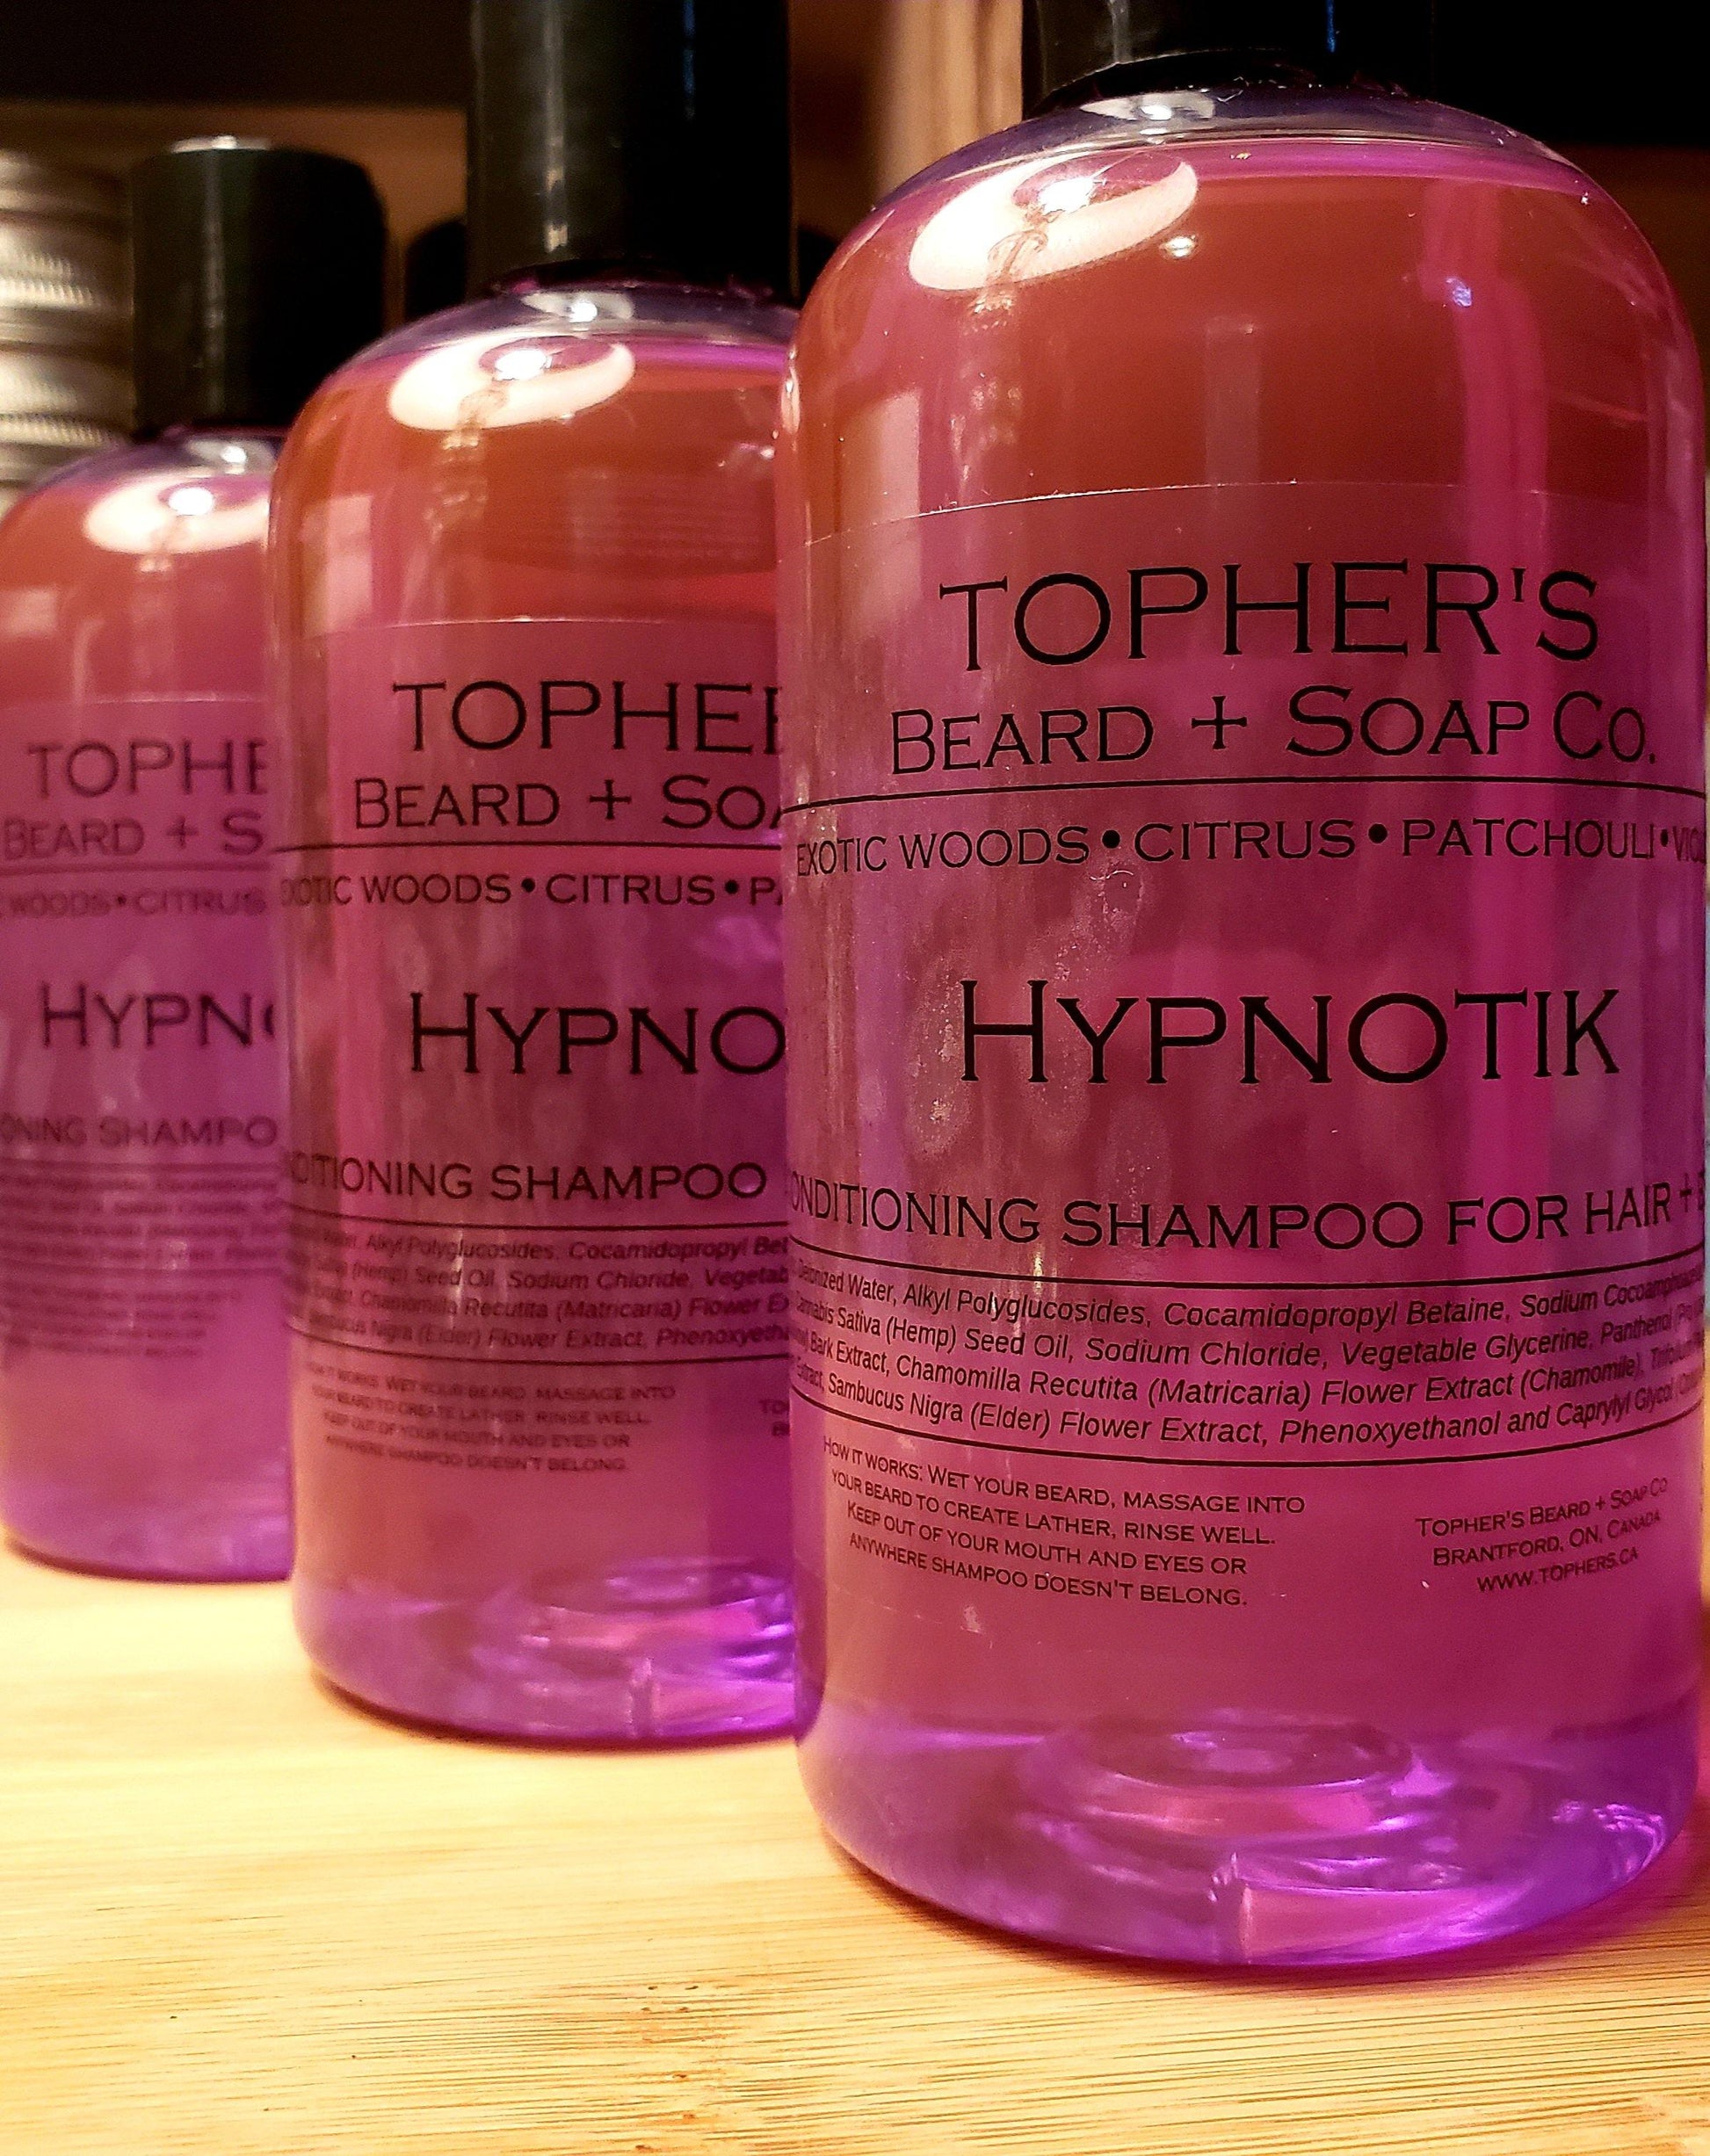 Hypnotik - 2 In 1 Hair + Beard Shampoo - The Wandering Merchant